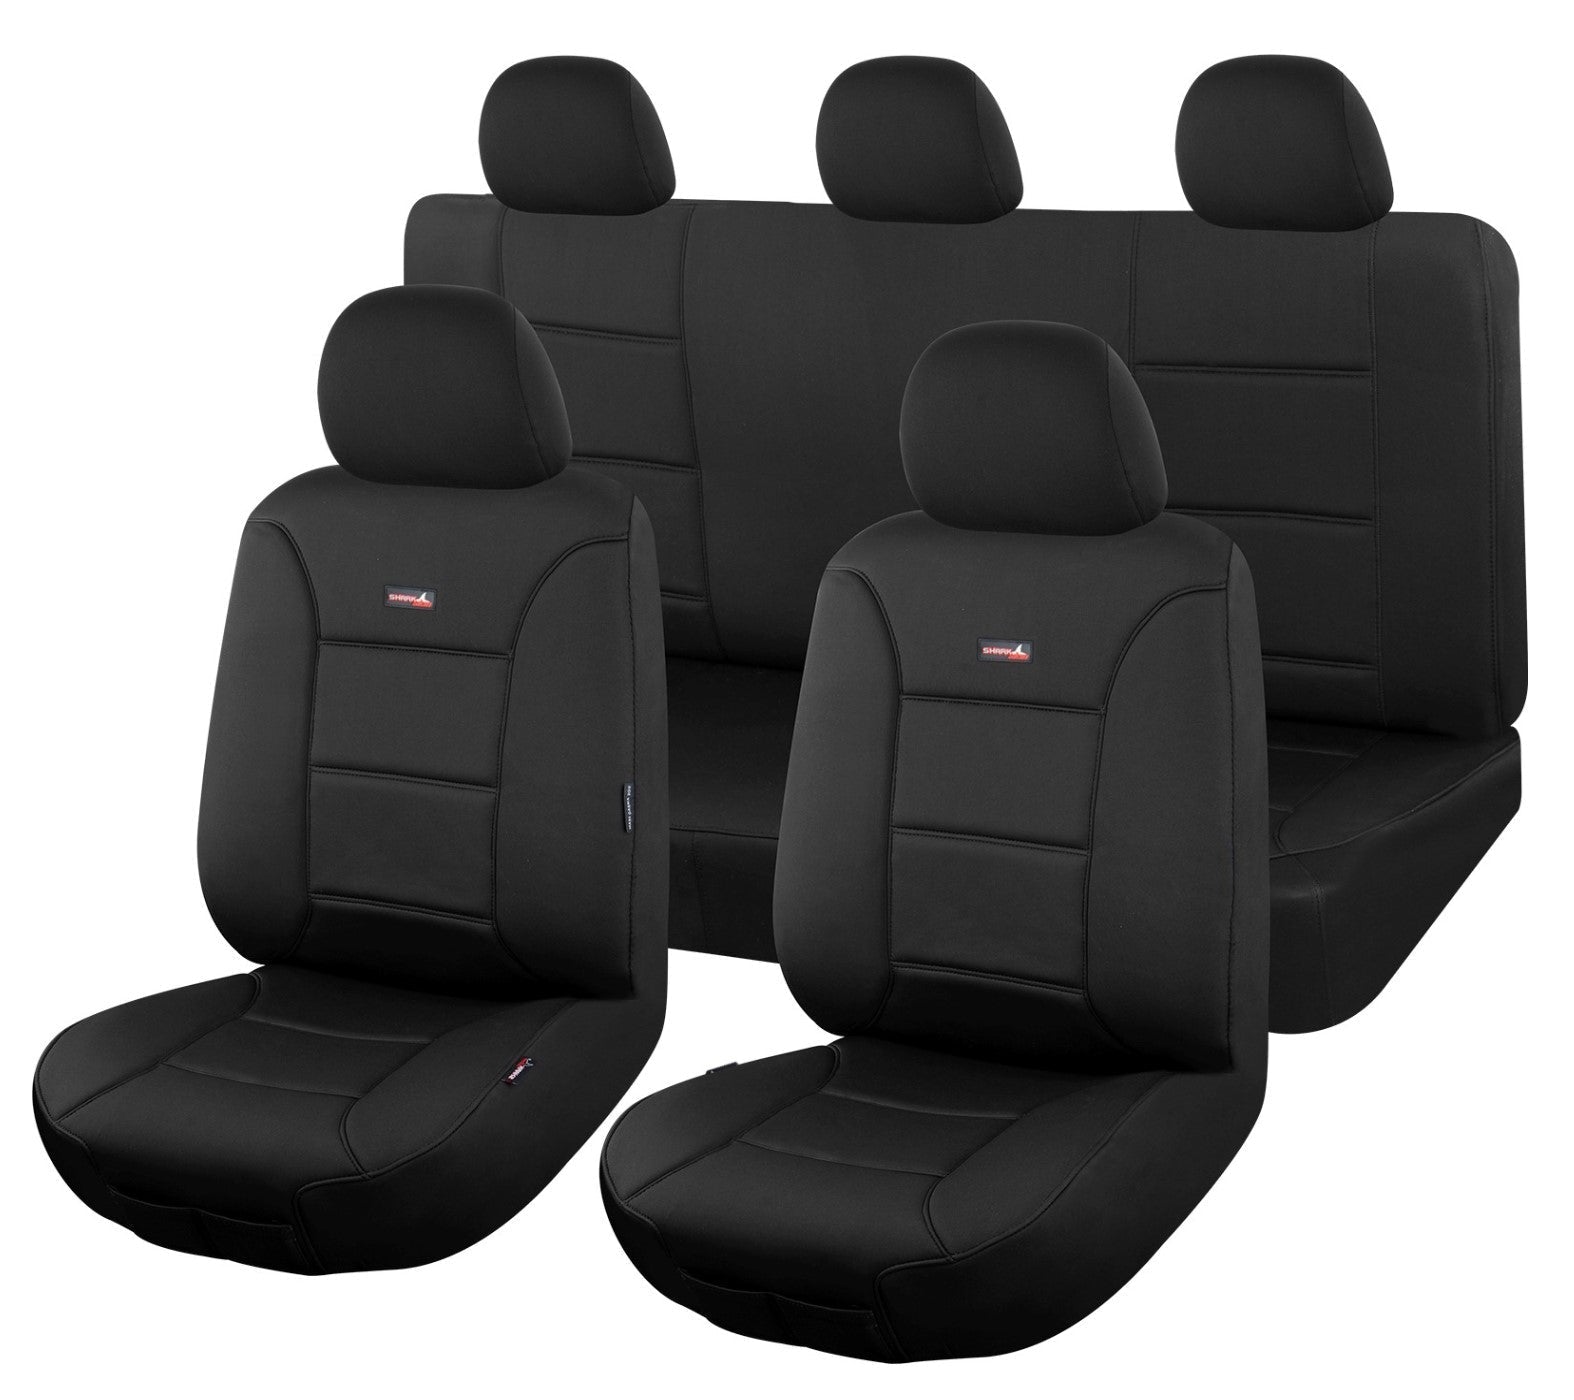 Seat Covers for TOYOTA LANDCRUISER 200 SERIES GXL - 60TH ANNIVERSARY VDJ200R-UZJ200R-URJ202R 11/2007 - 06/2021 4X4 SUV/WAGON 8 SEATERS FM ONLY BLACK? SHARKSKIN